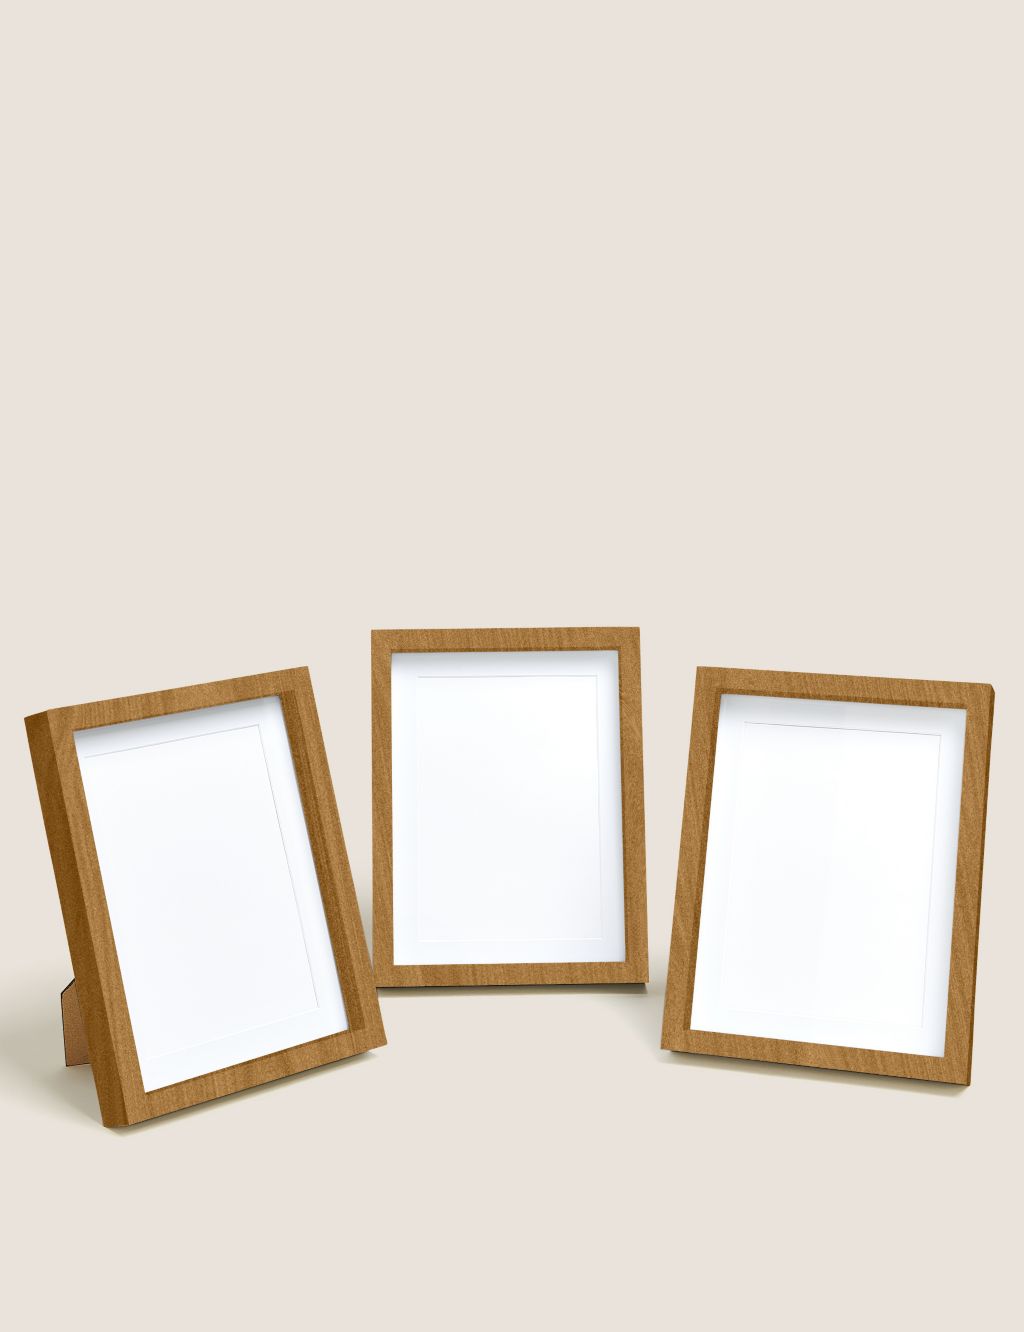 Set of 3 Wood Photo Frames 5x7 inch image 1